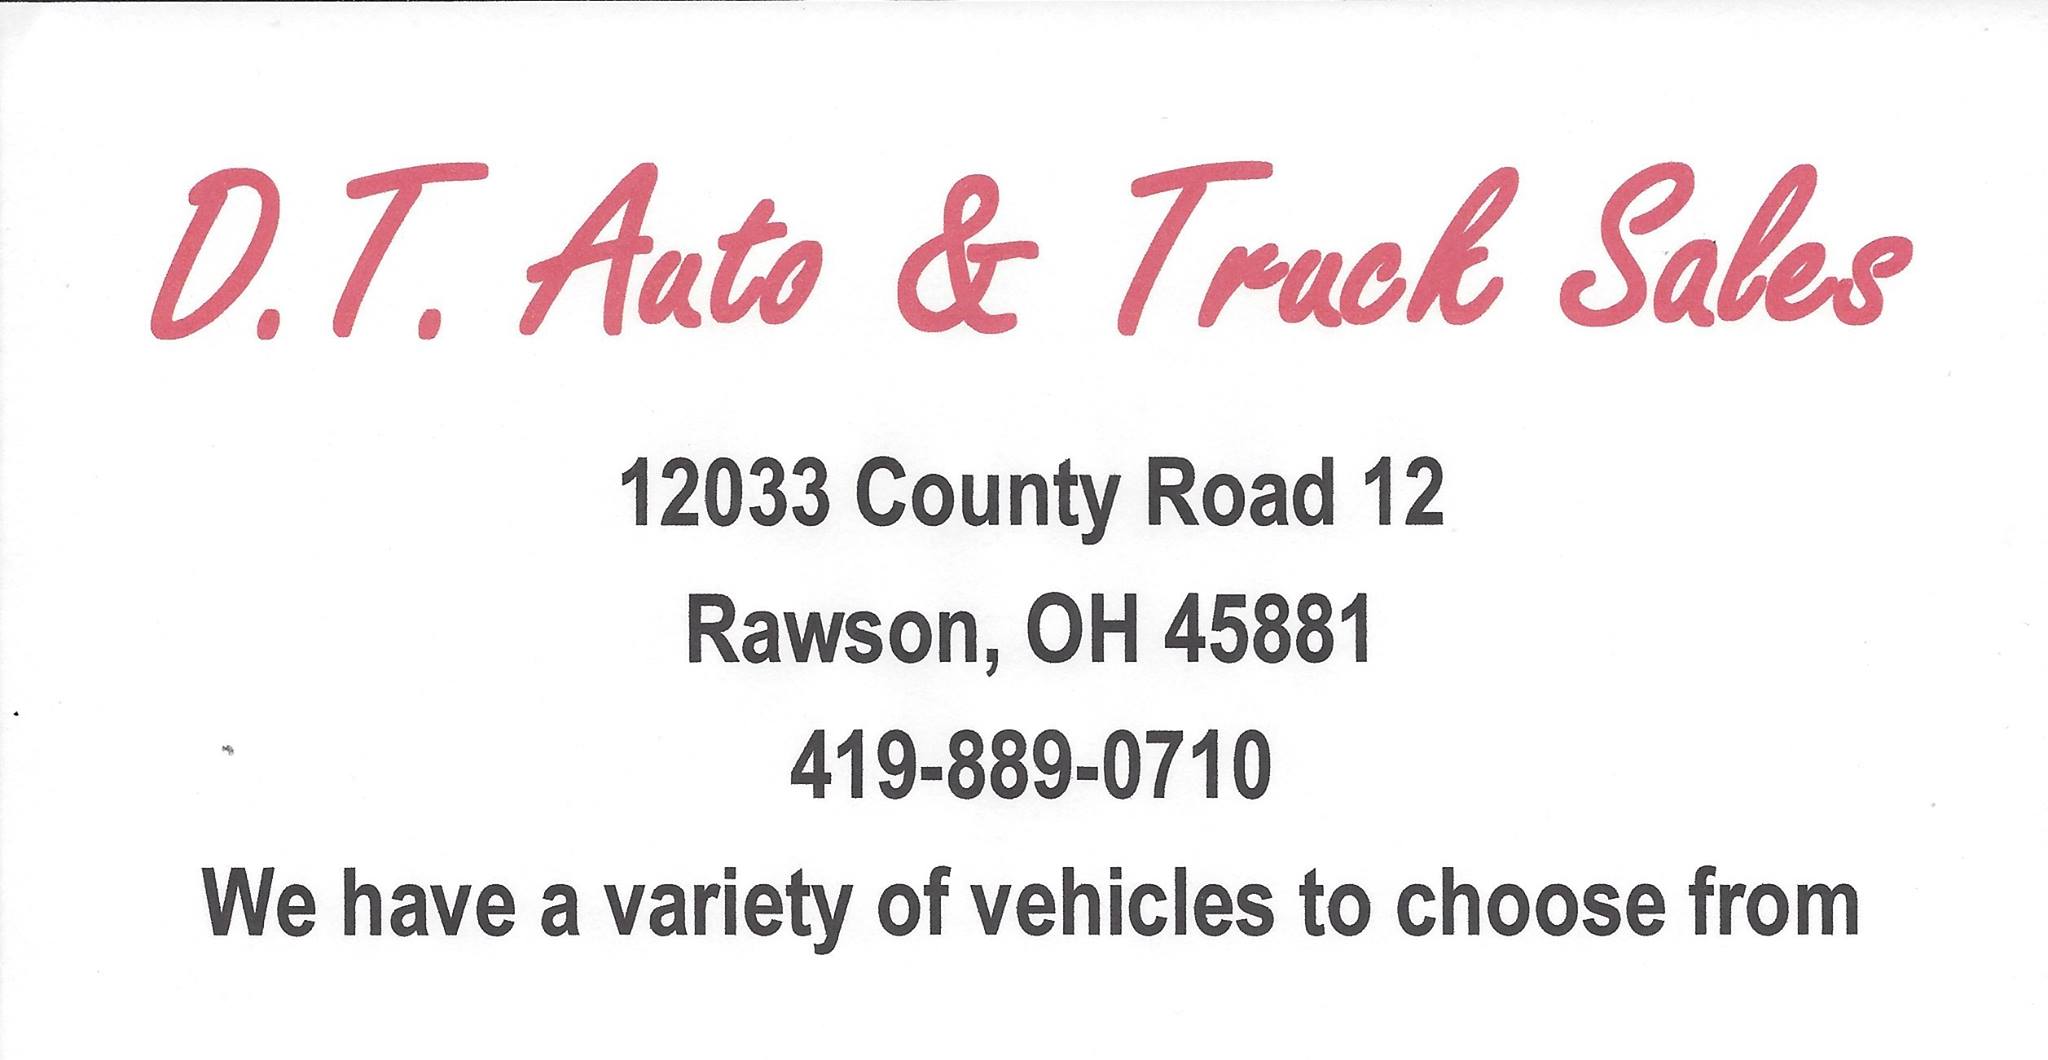 D.T. Auto & Truck Sales